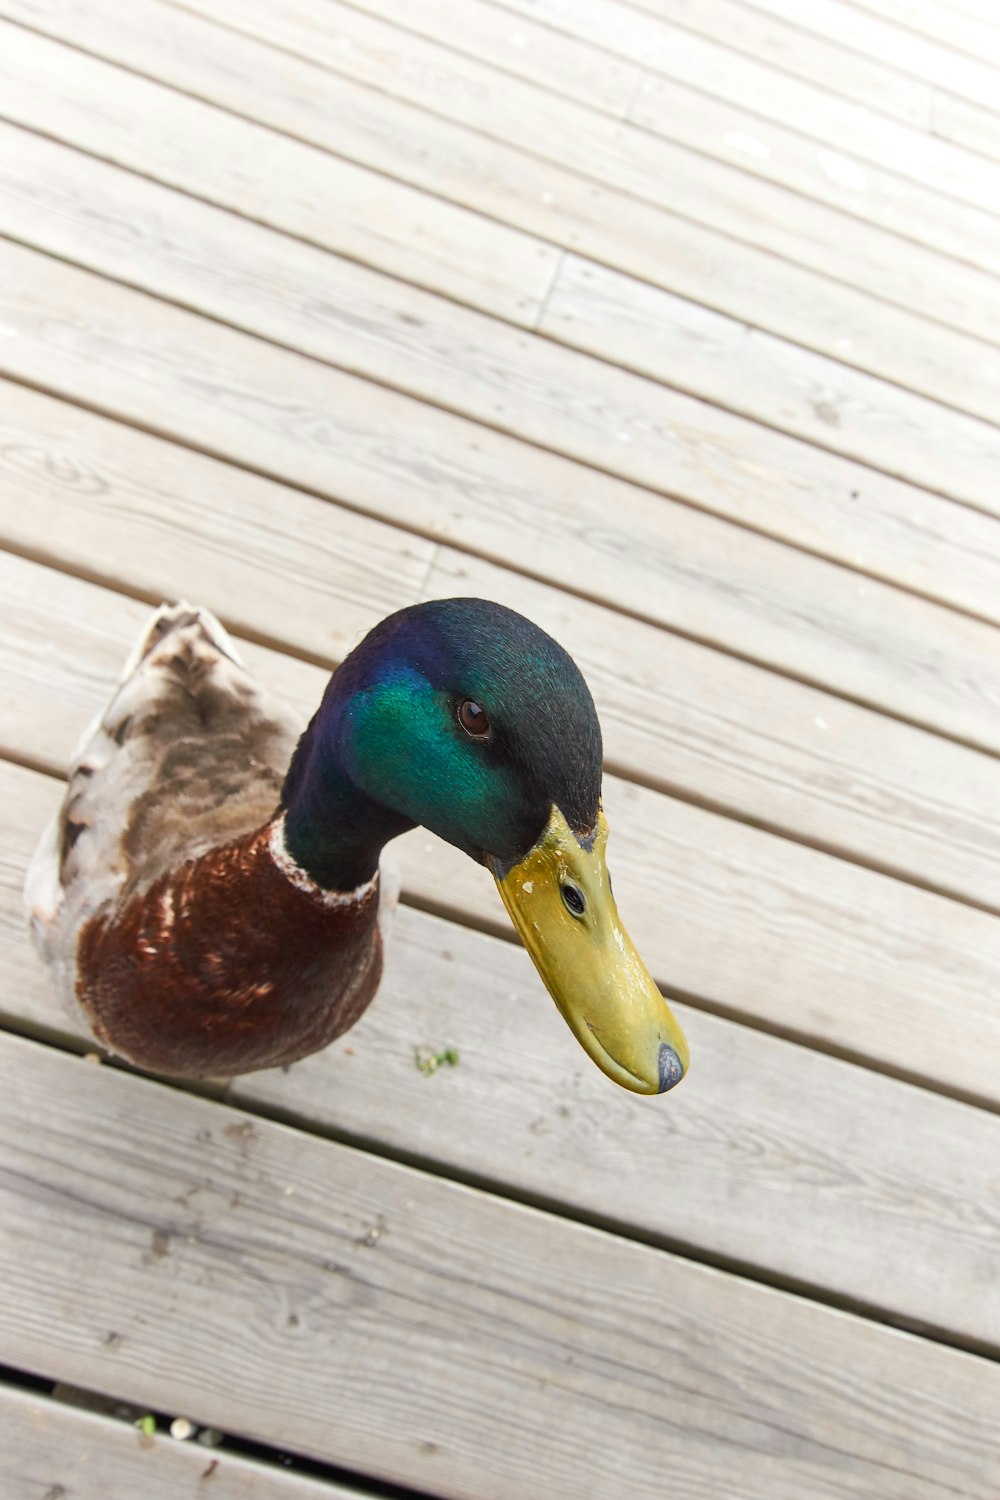 brown and green mallard duck on brown wooden floor